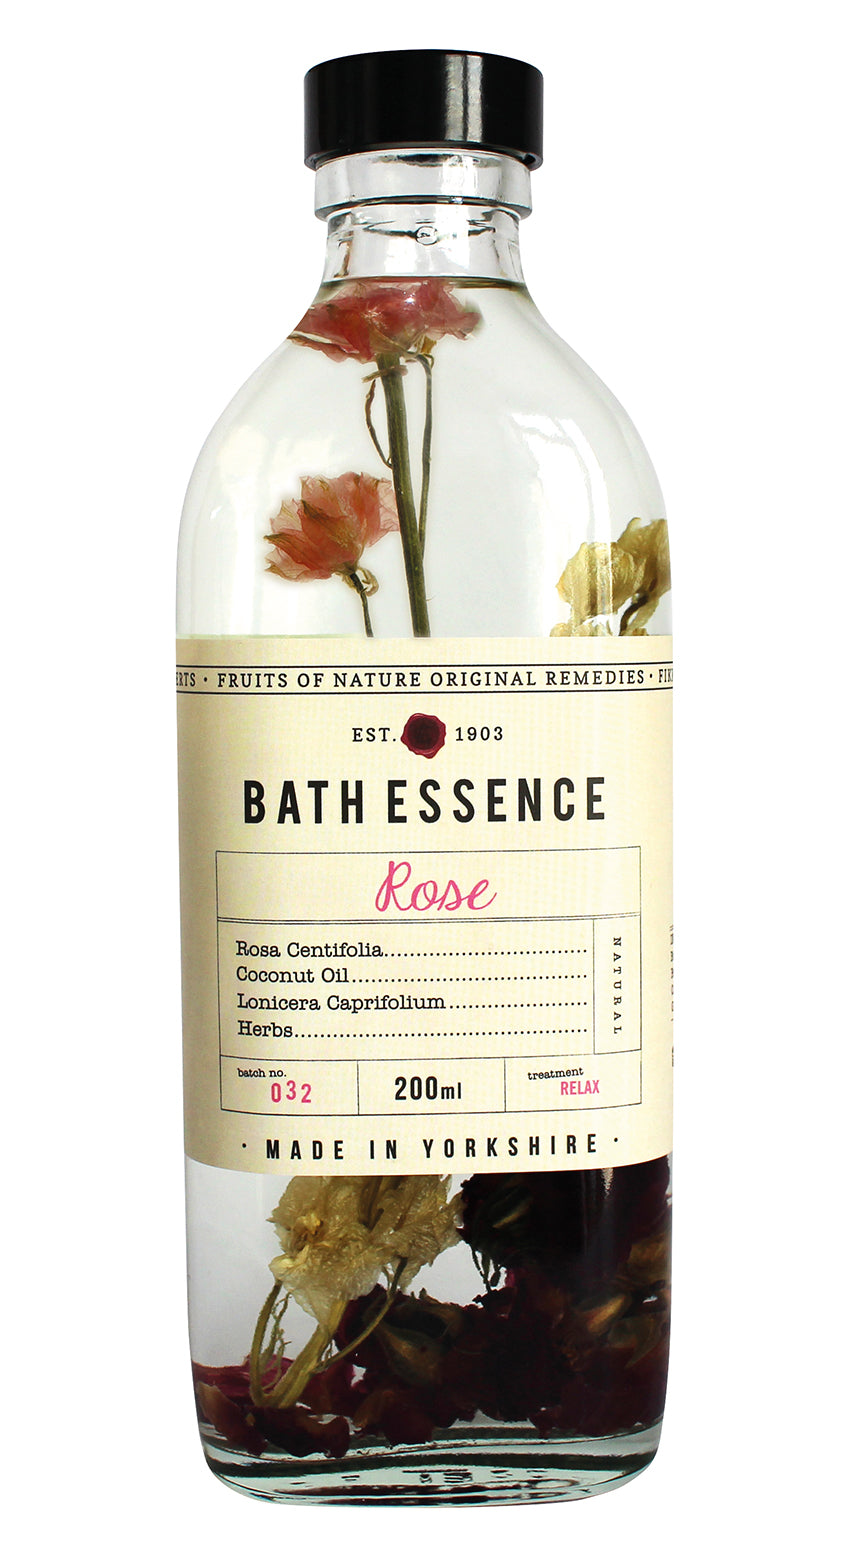 Rose bath essence